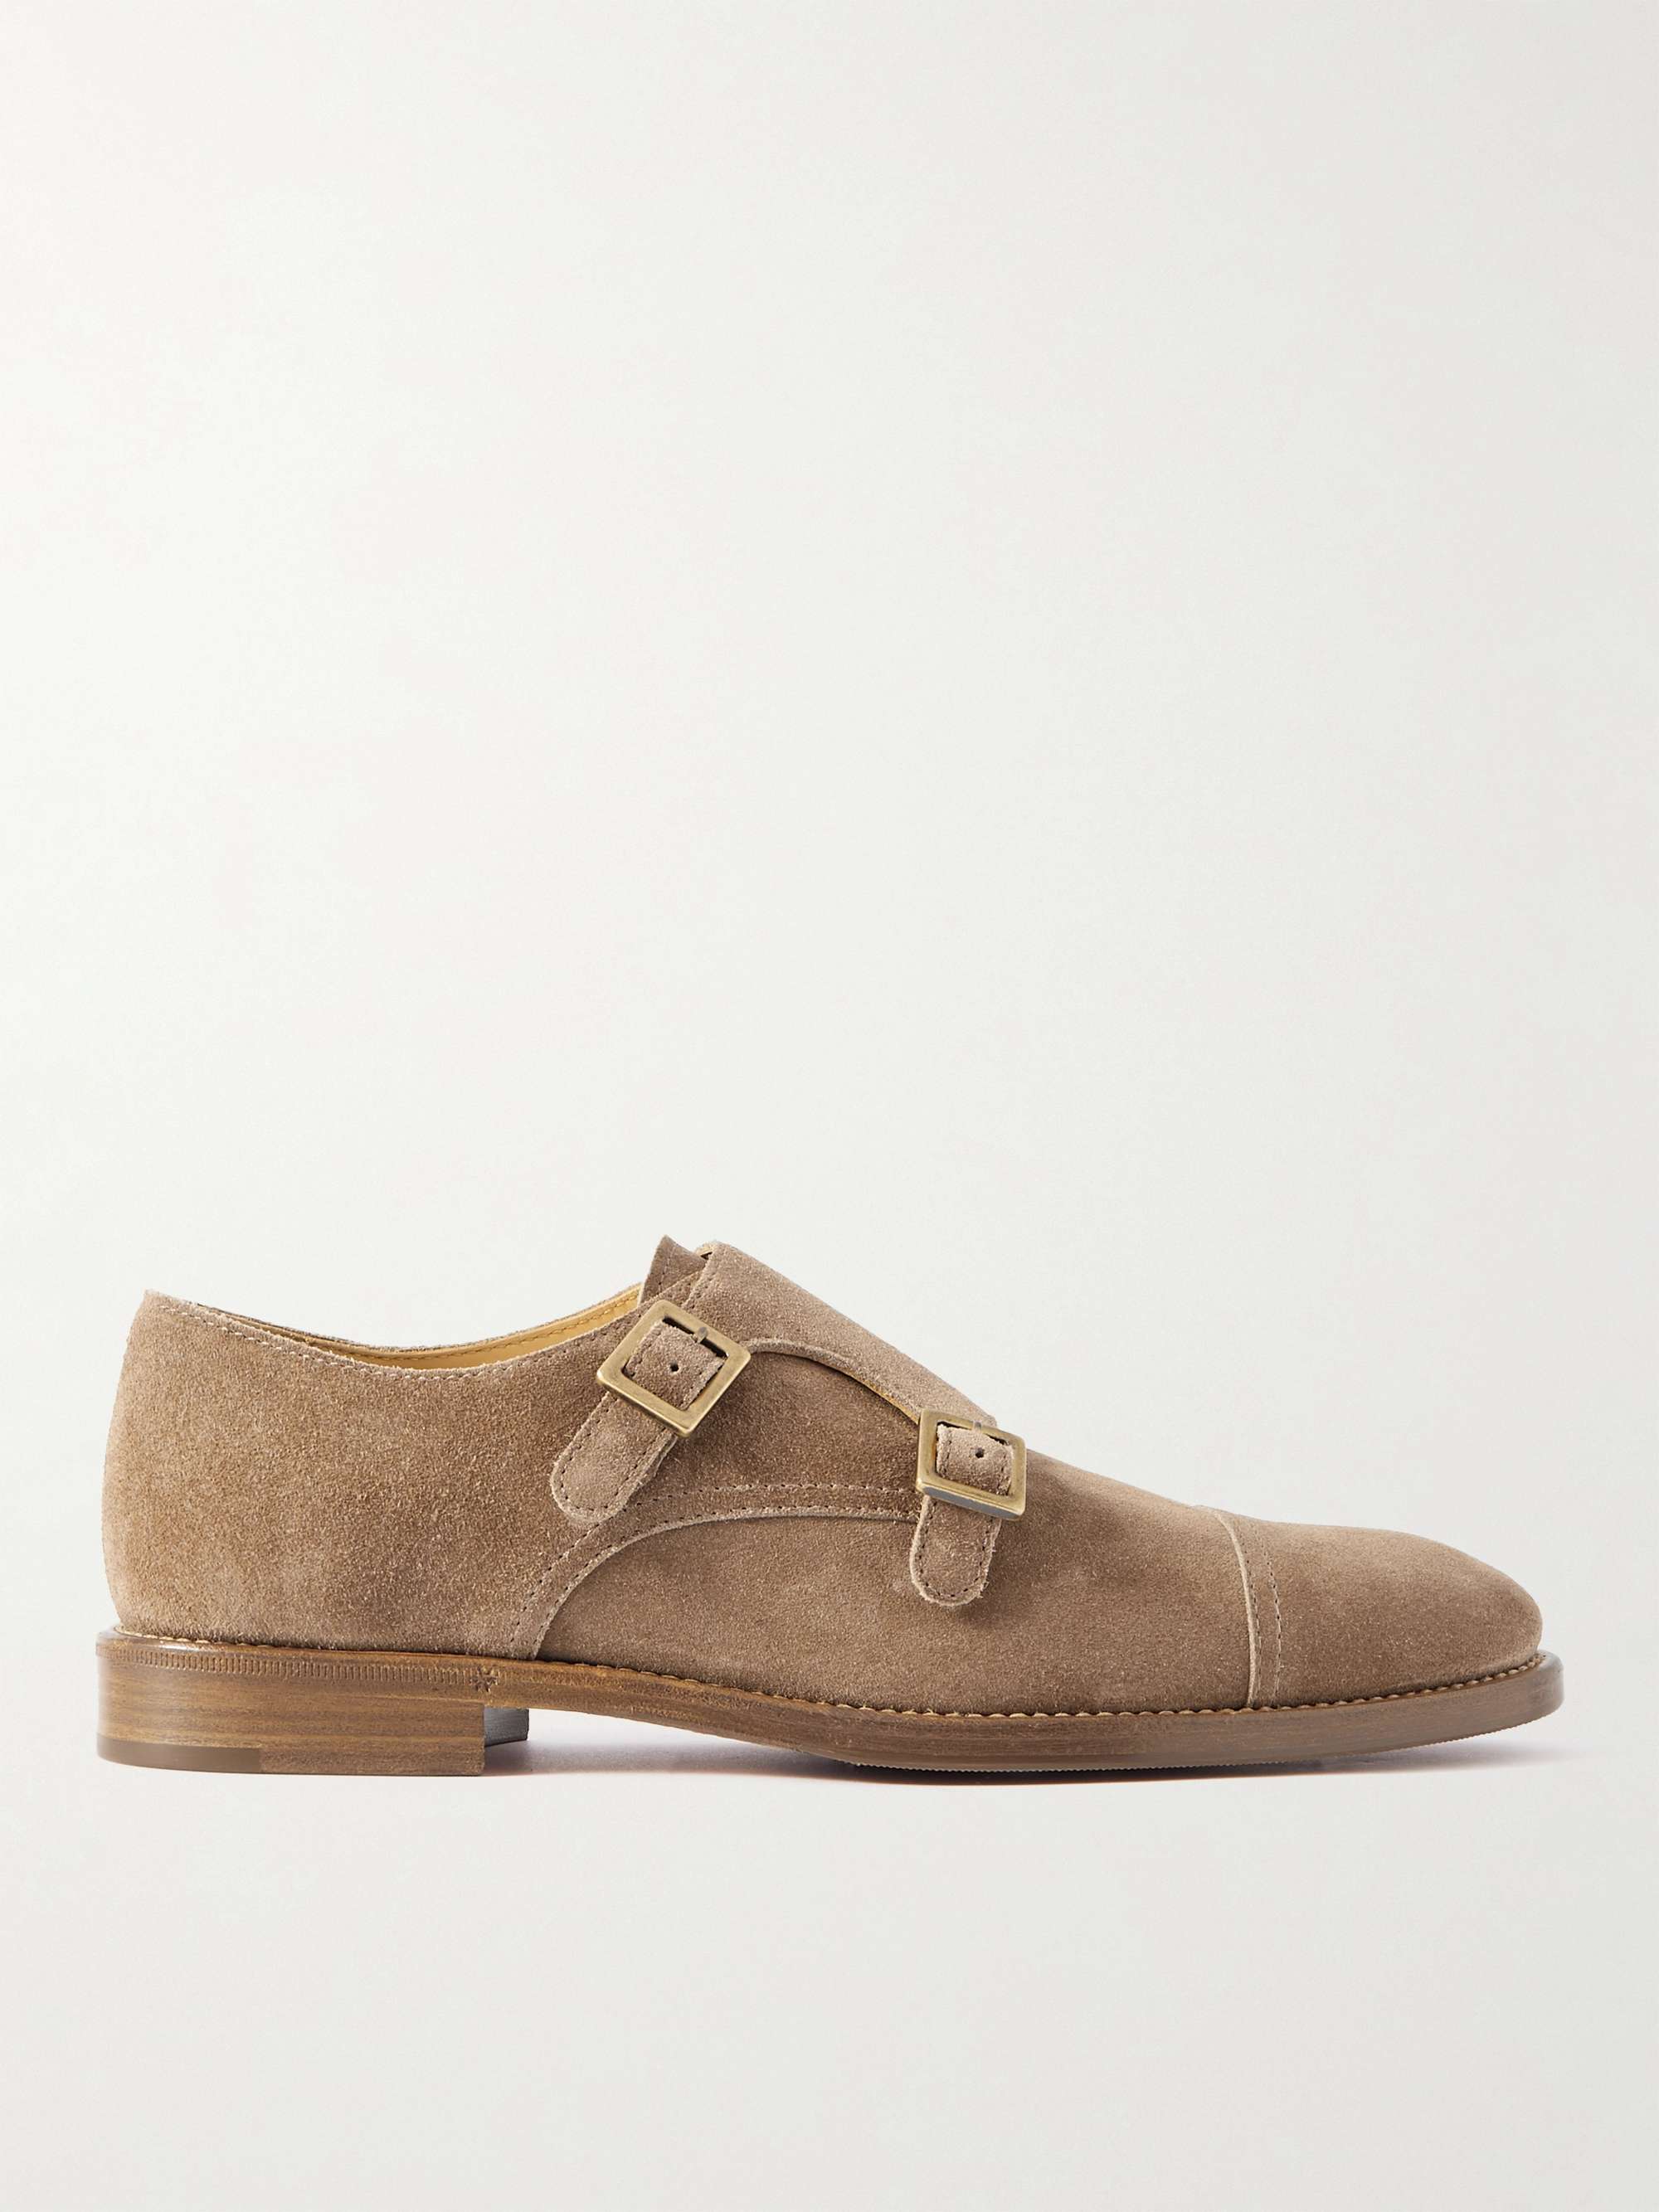 BRUNELLO CUCINELLI Suede Monk-Strap Shoes for Men | MR PORTER